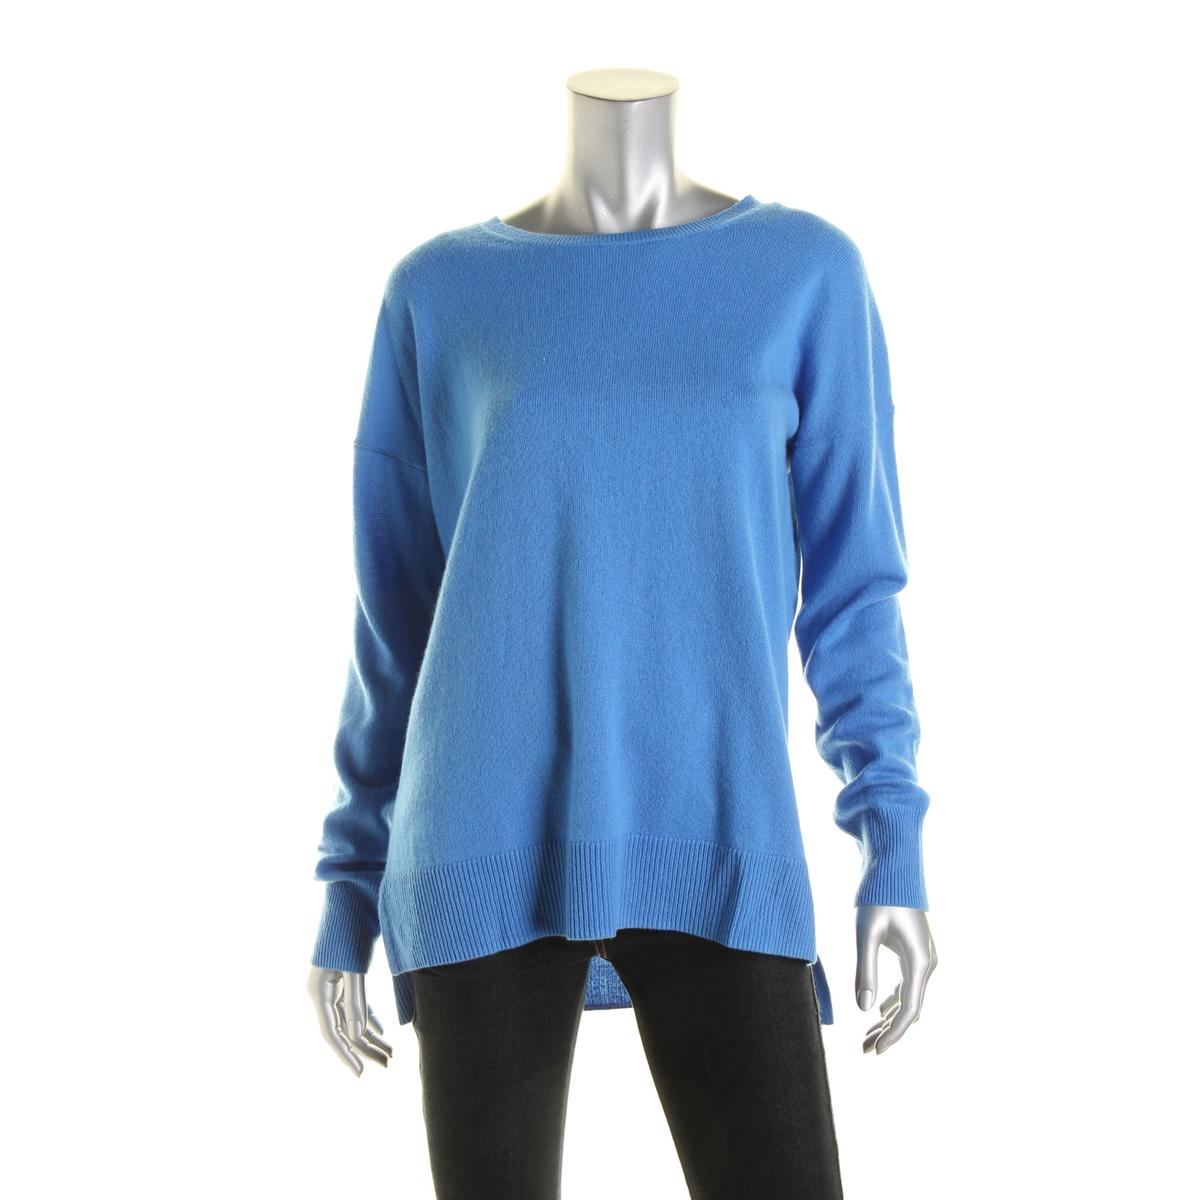 Aqua 3829 Womens Cashmere Knit Crew Pullover Sweater Top BHFO | eBay